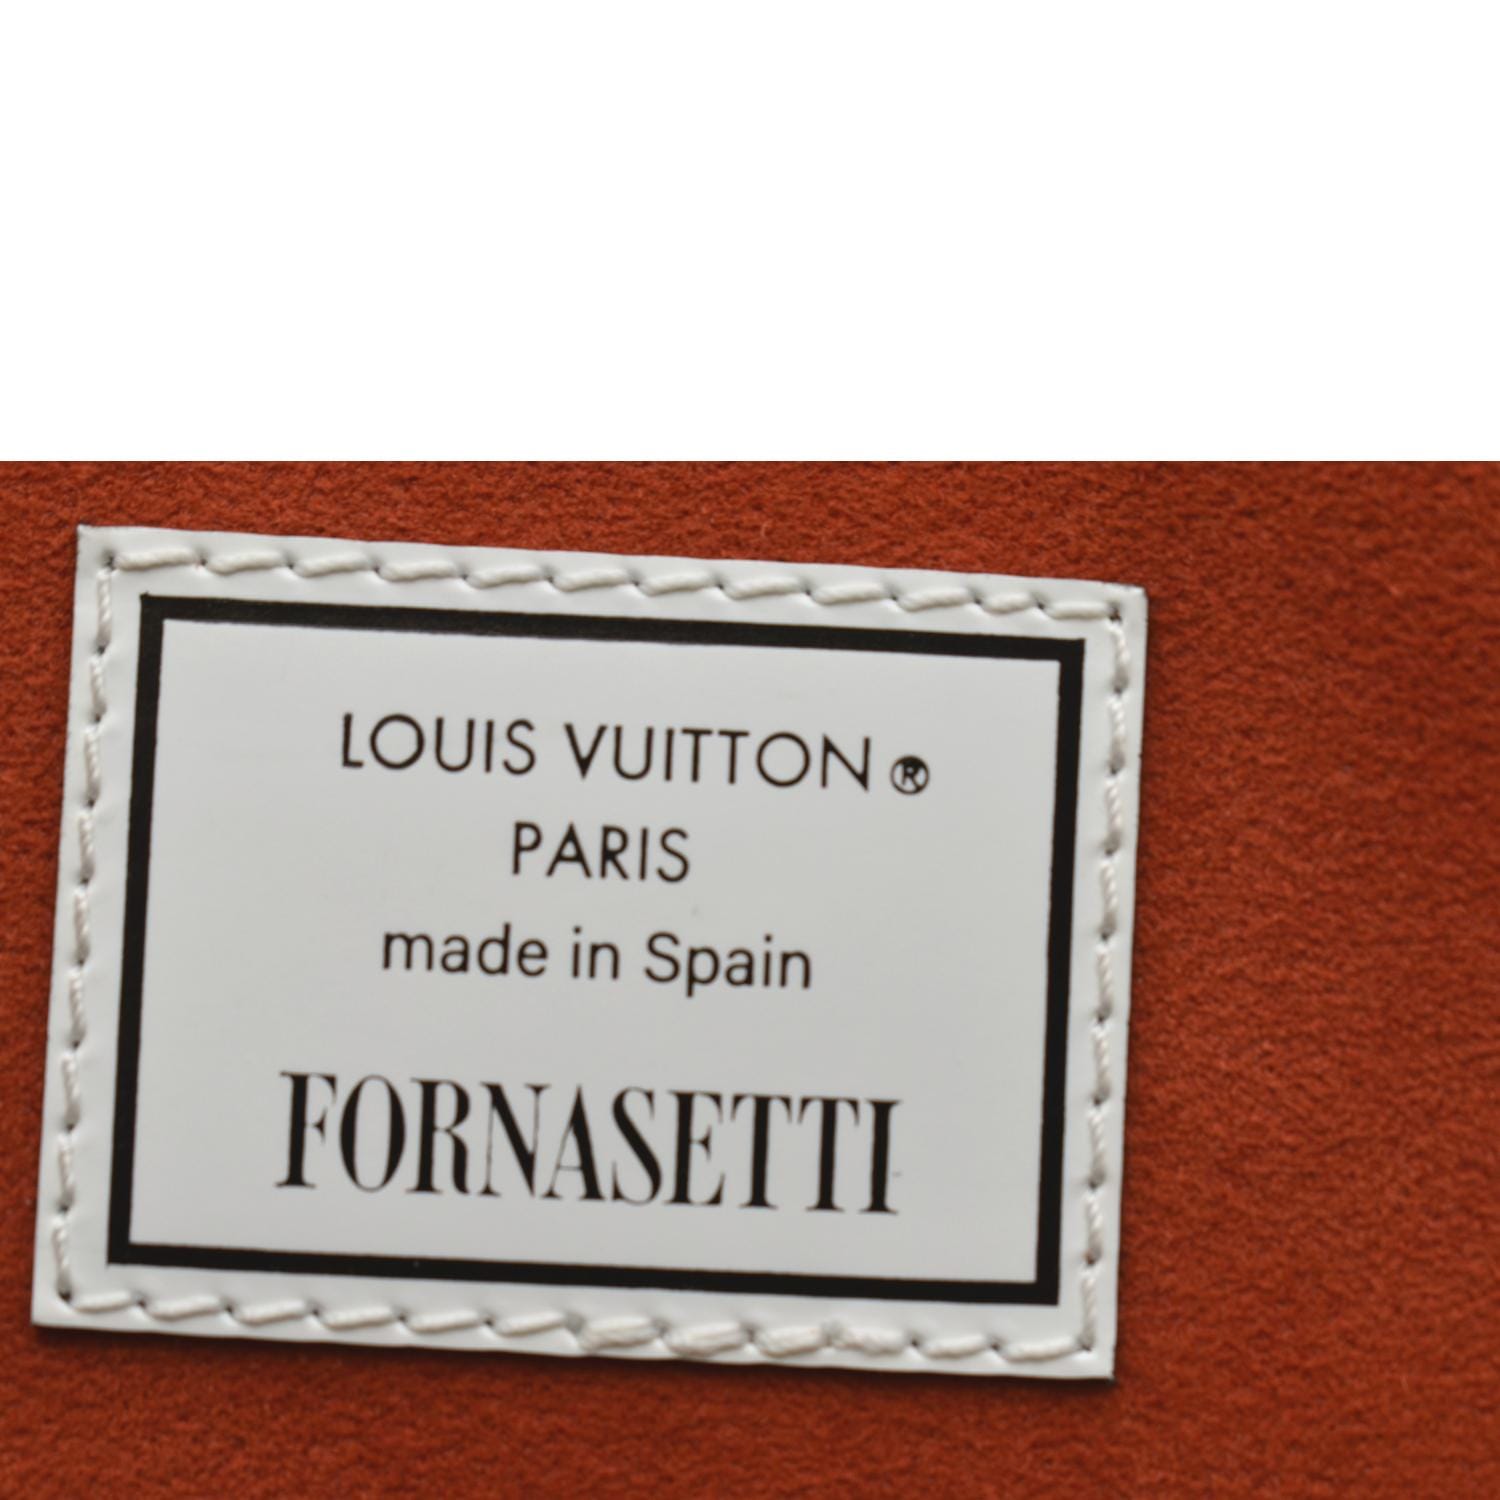 Sicily's New Louis Vuitton Café Celebrates the Toarmina Neverfull Bag